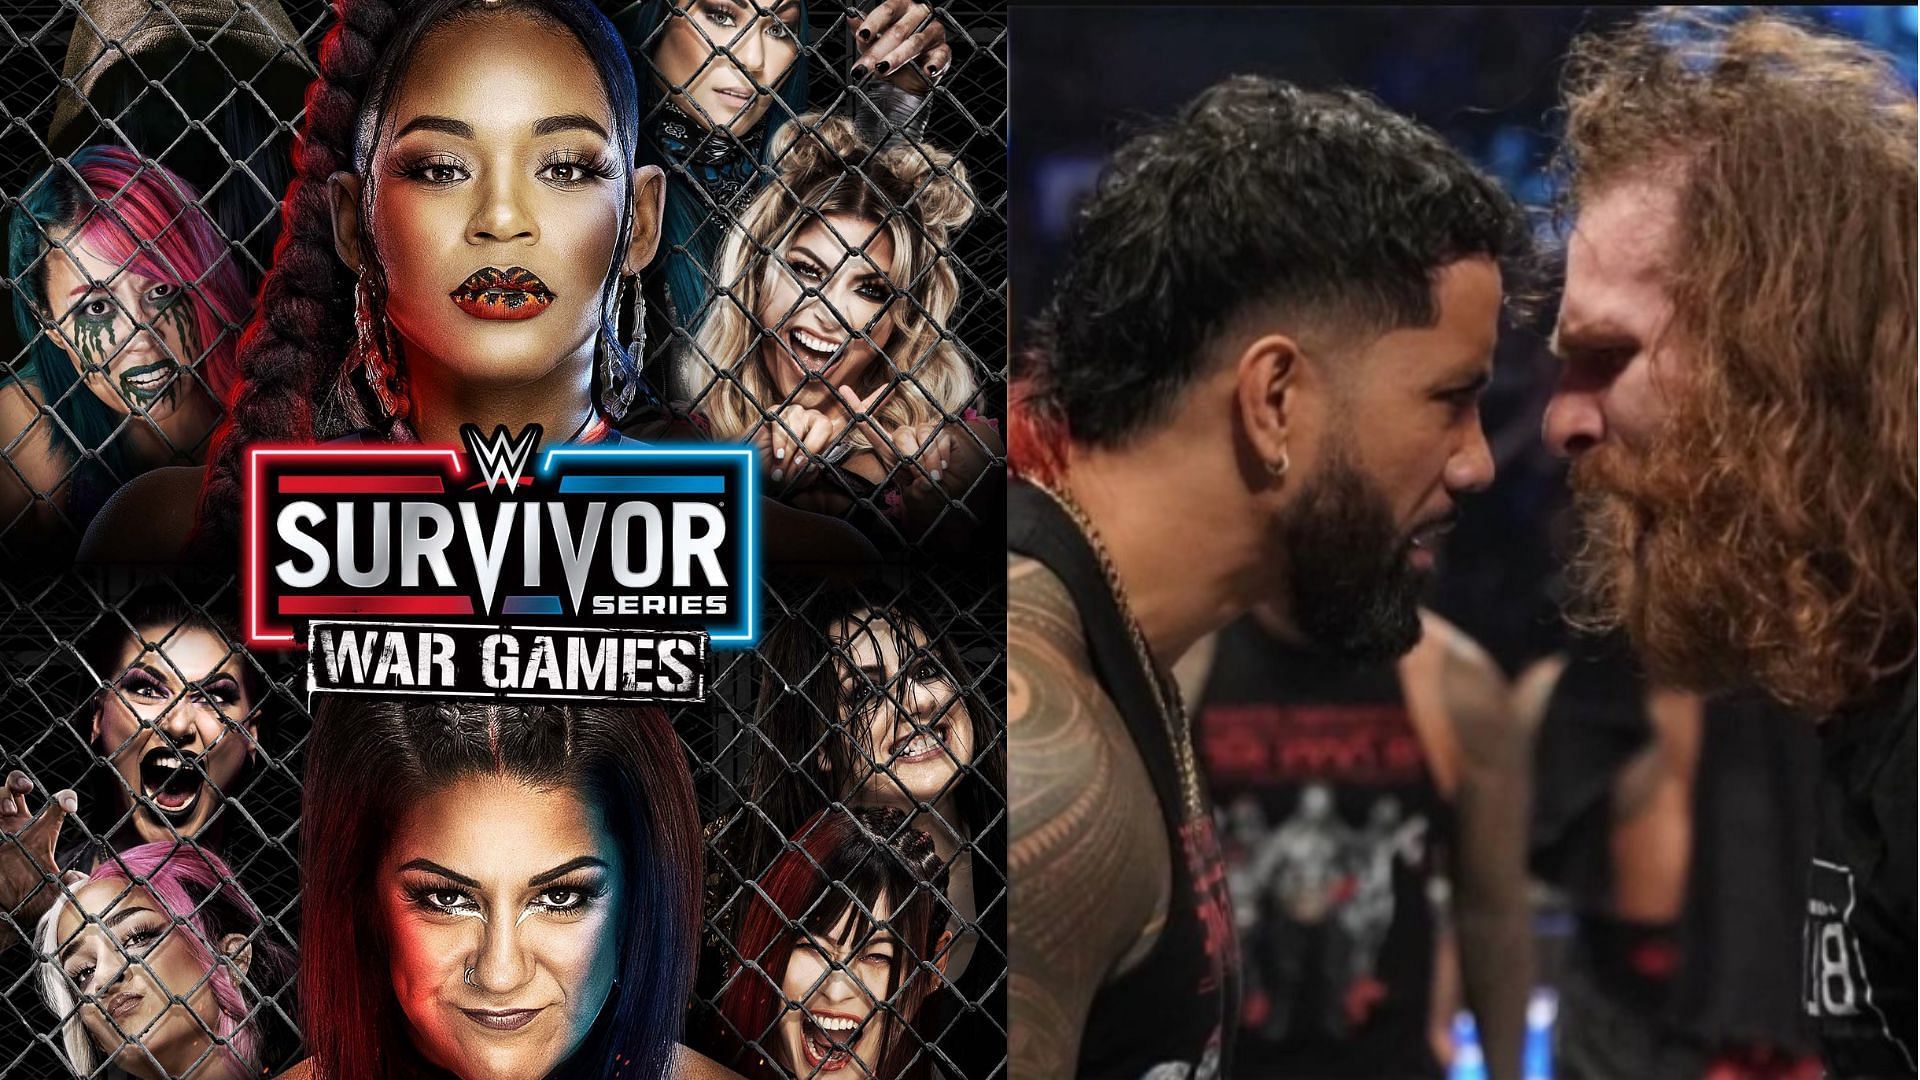 Shocking character changes could happen at WWE Survivor Series WarGames